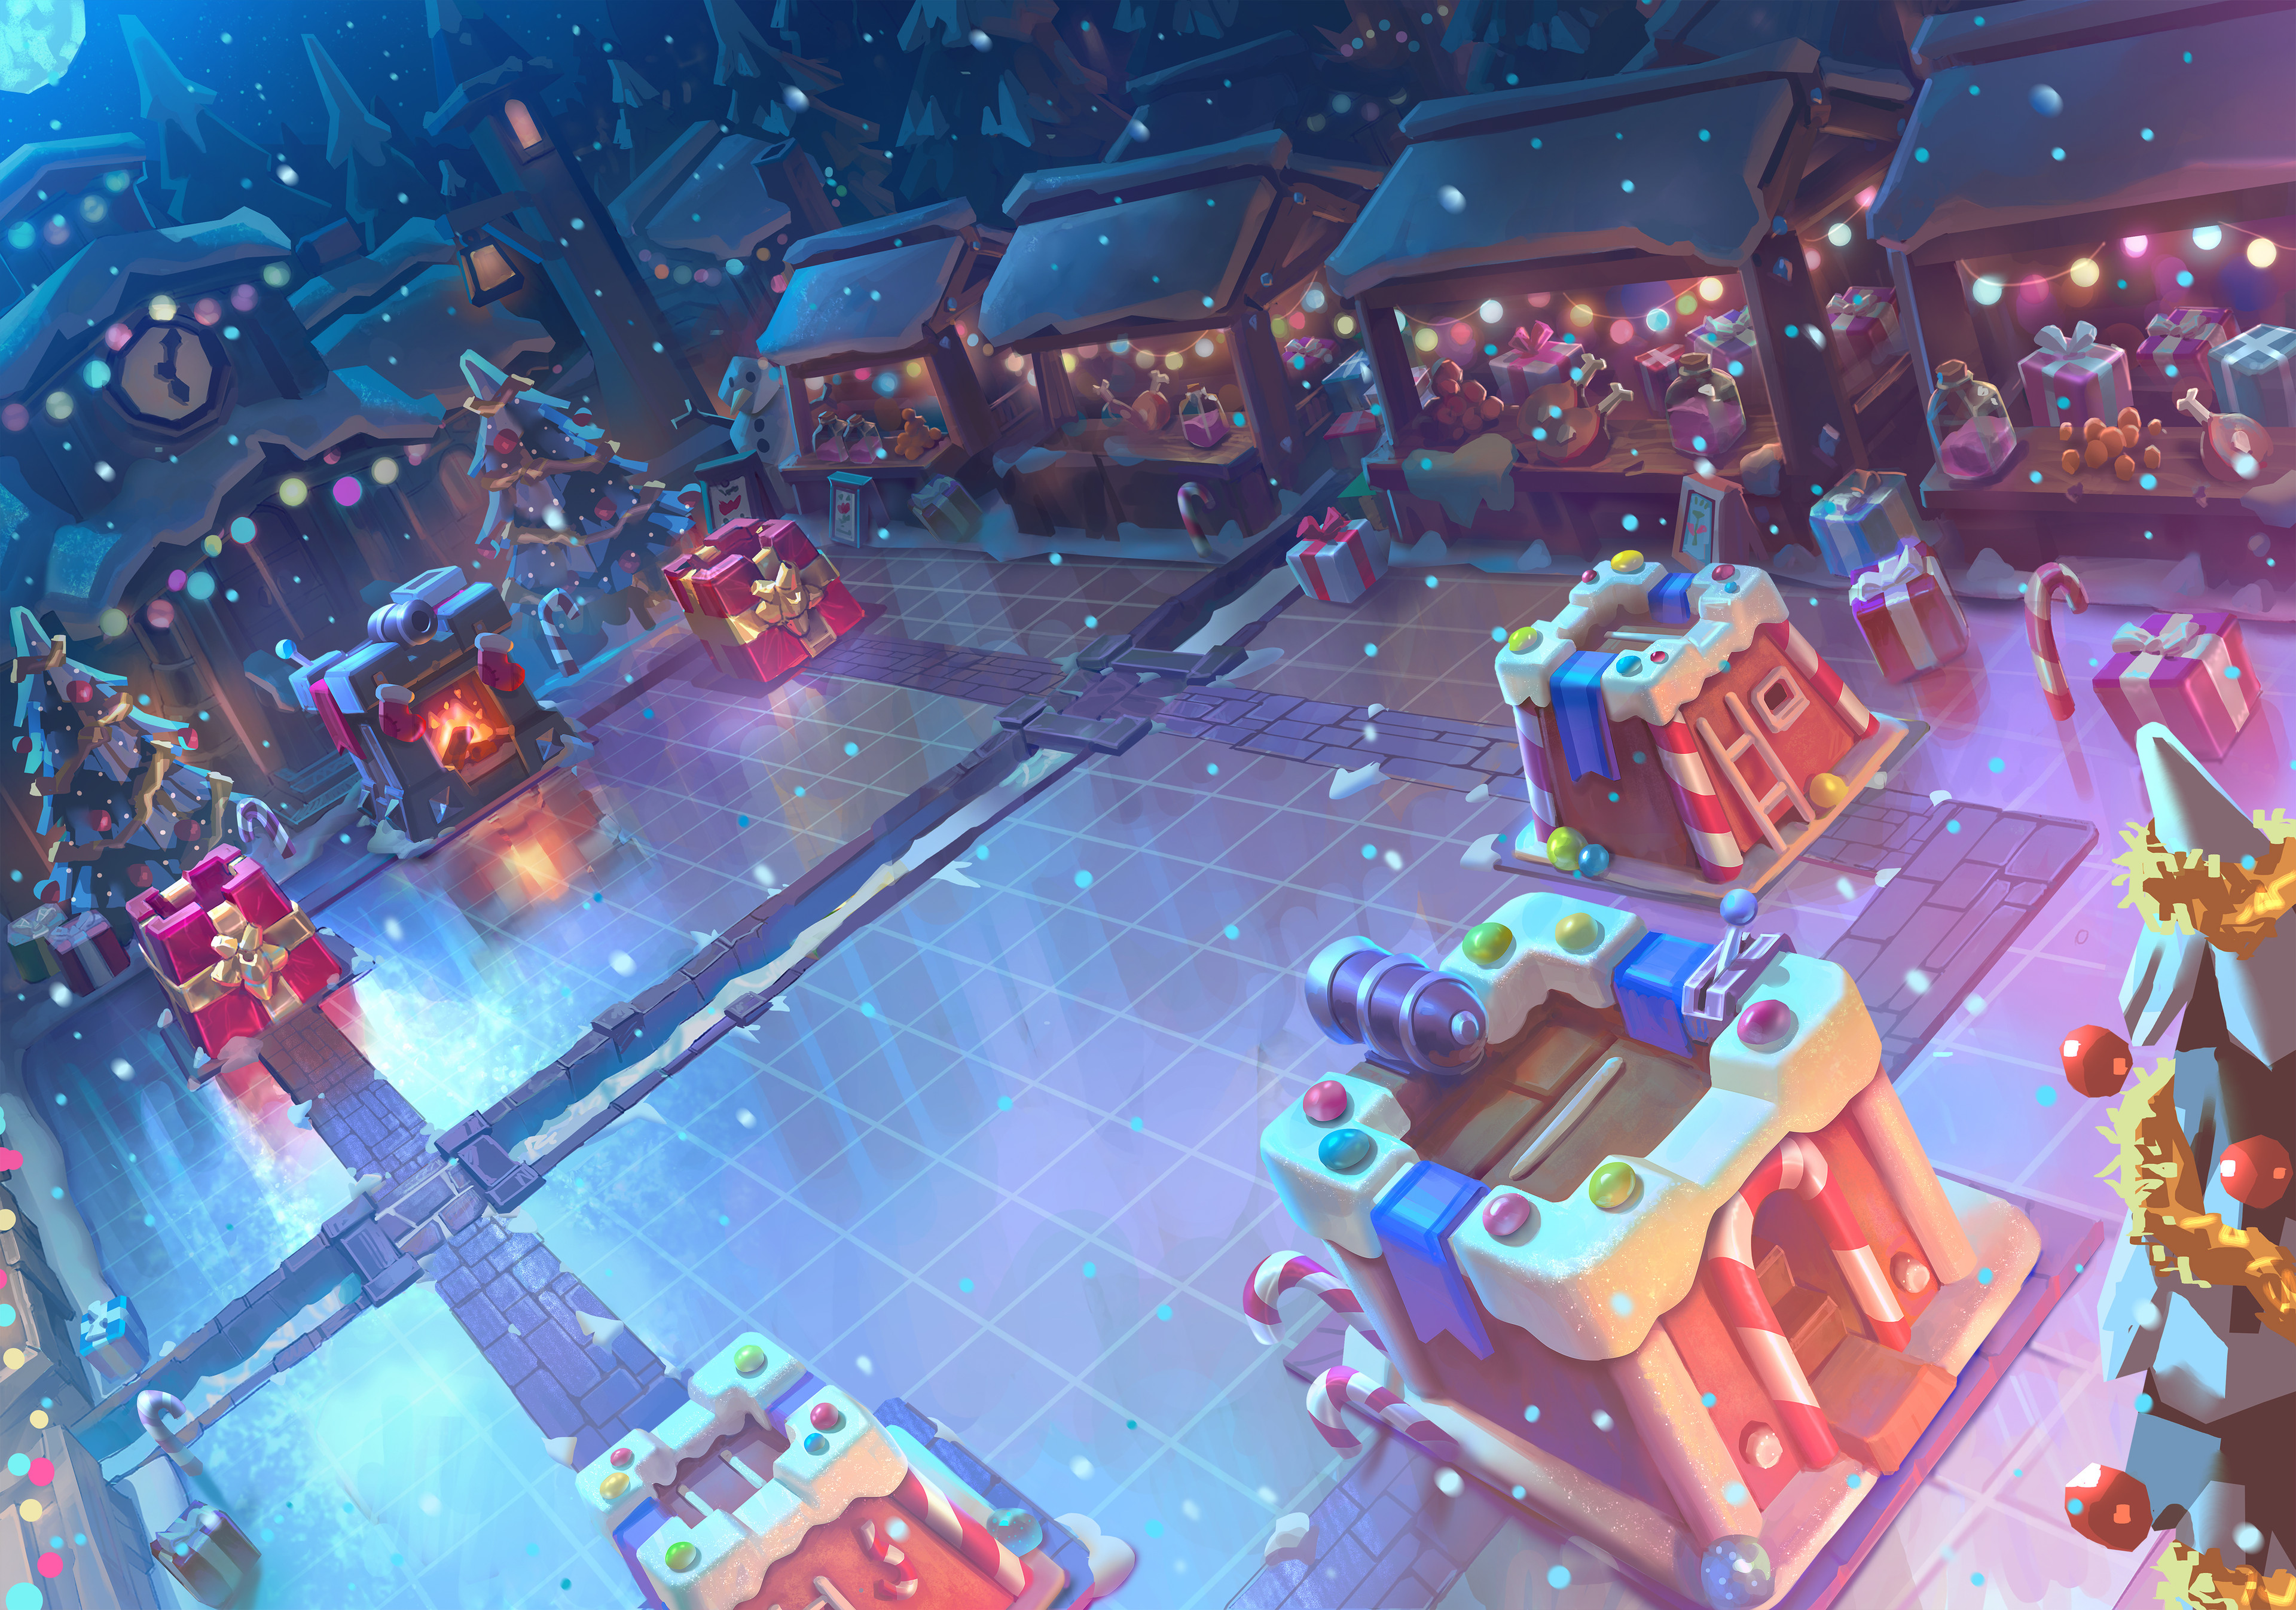 ArtStation Clash Royale Christmas Video Game Art Arena Video Games Presents Christmas Tree Snow Moon 3840x2692